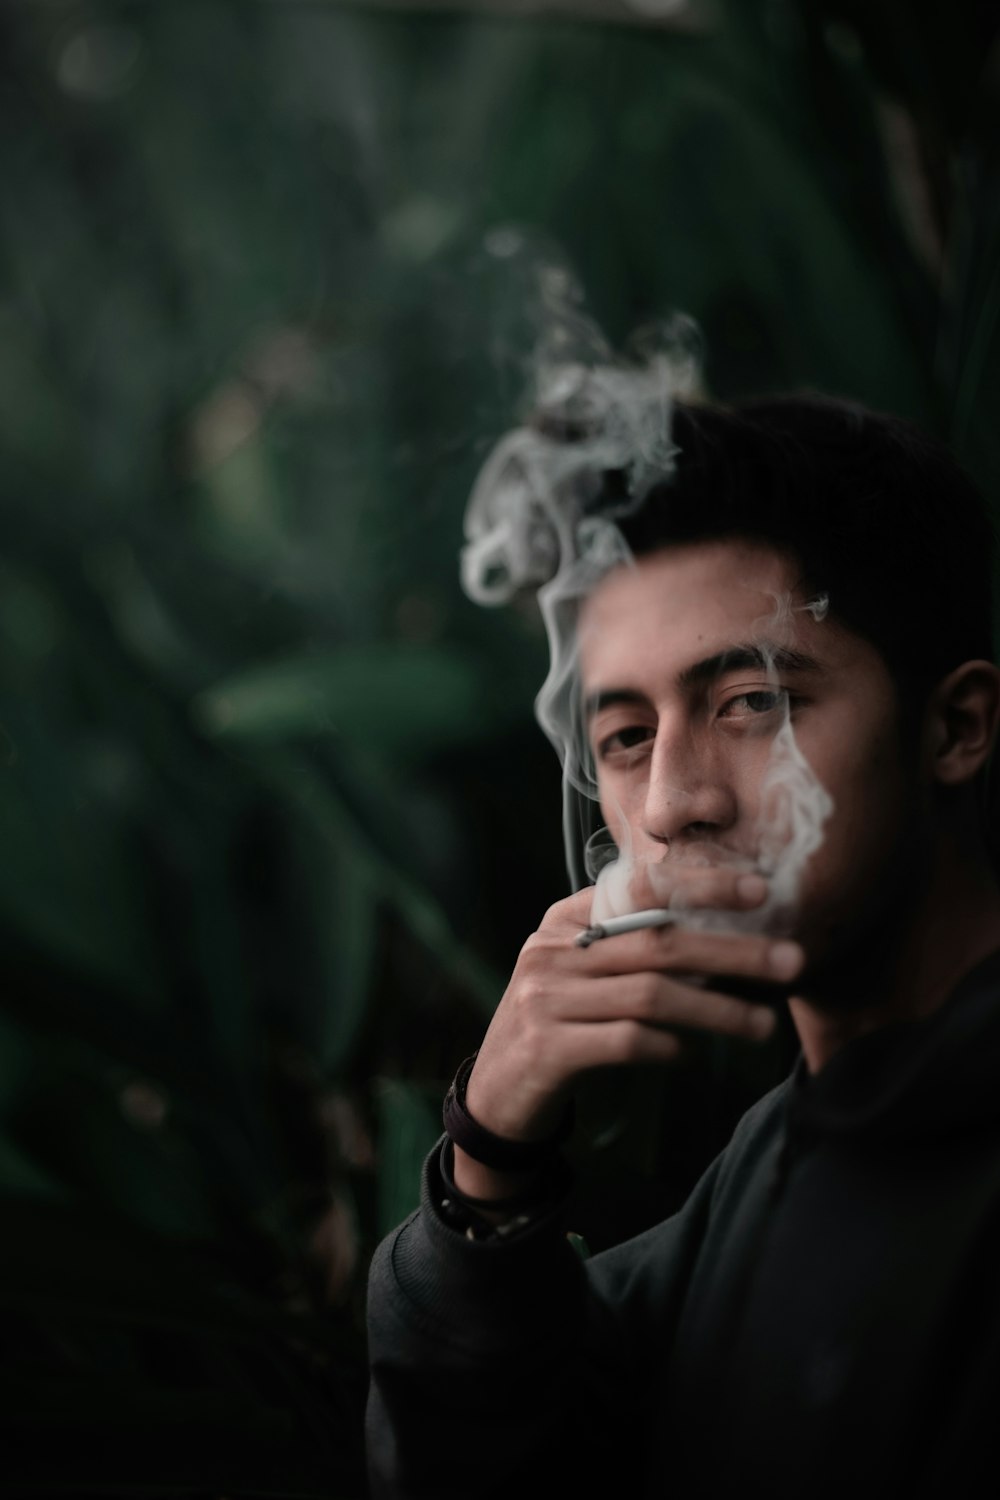 man smoking near garden